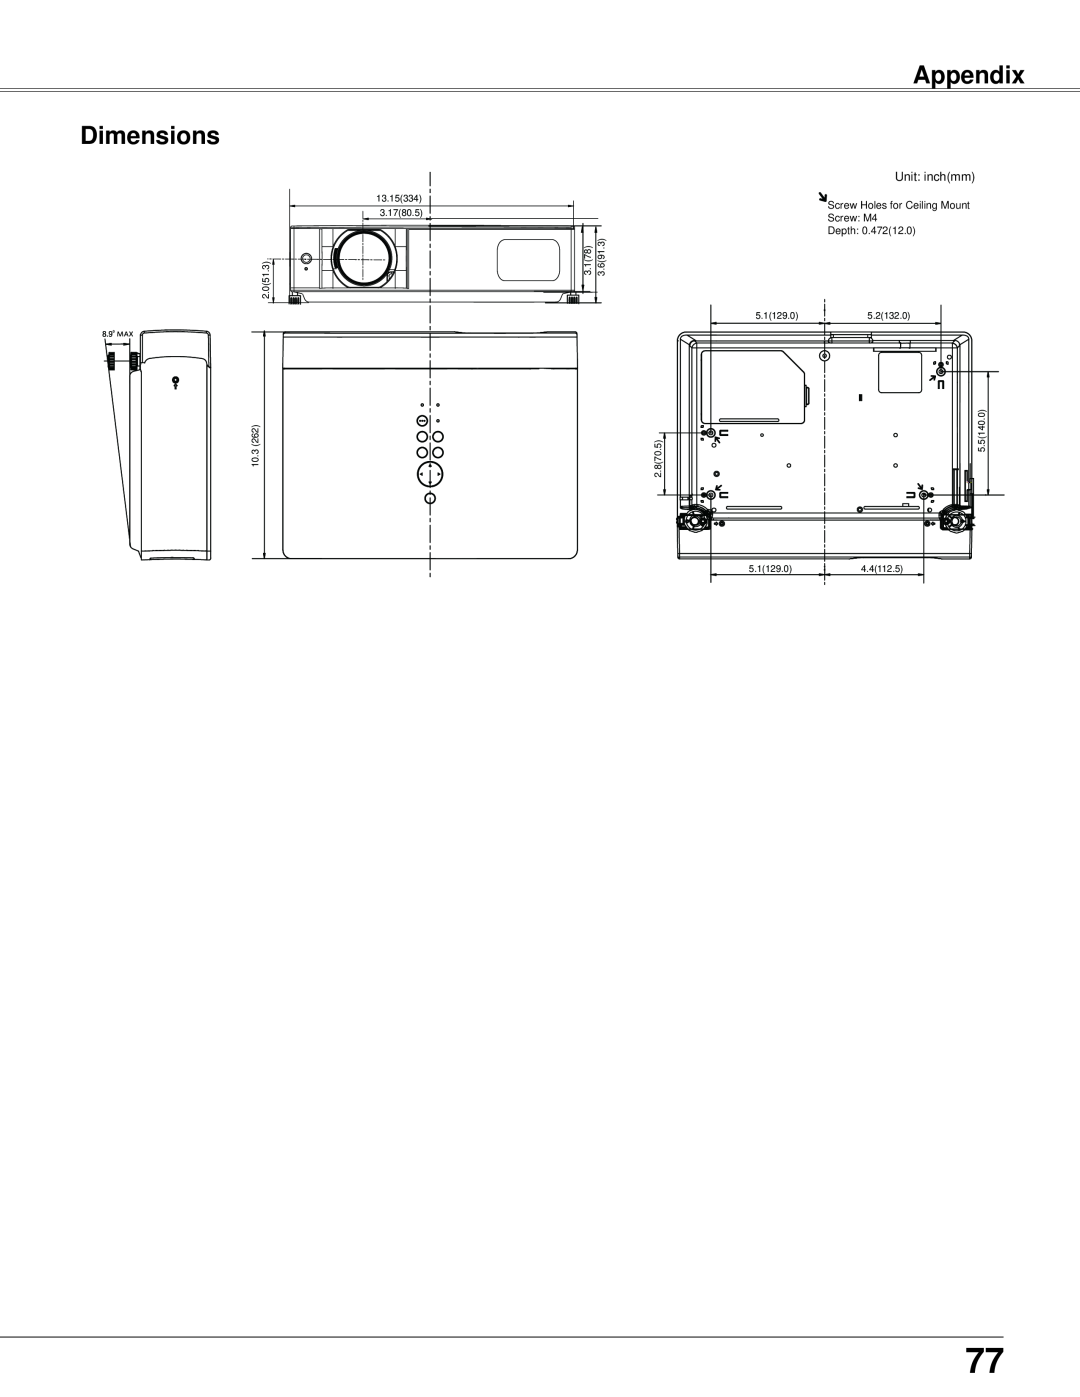 Eiki LC-XB42N owner manual Appendix Dimensions, Unit inchmm, Screw Holes for Ceiling Mount Screw M4 Depth 